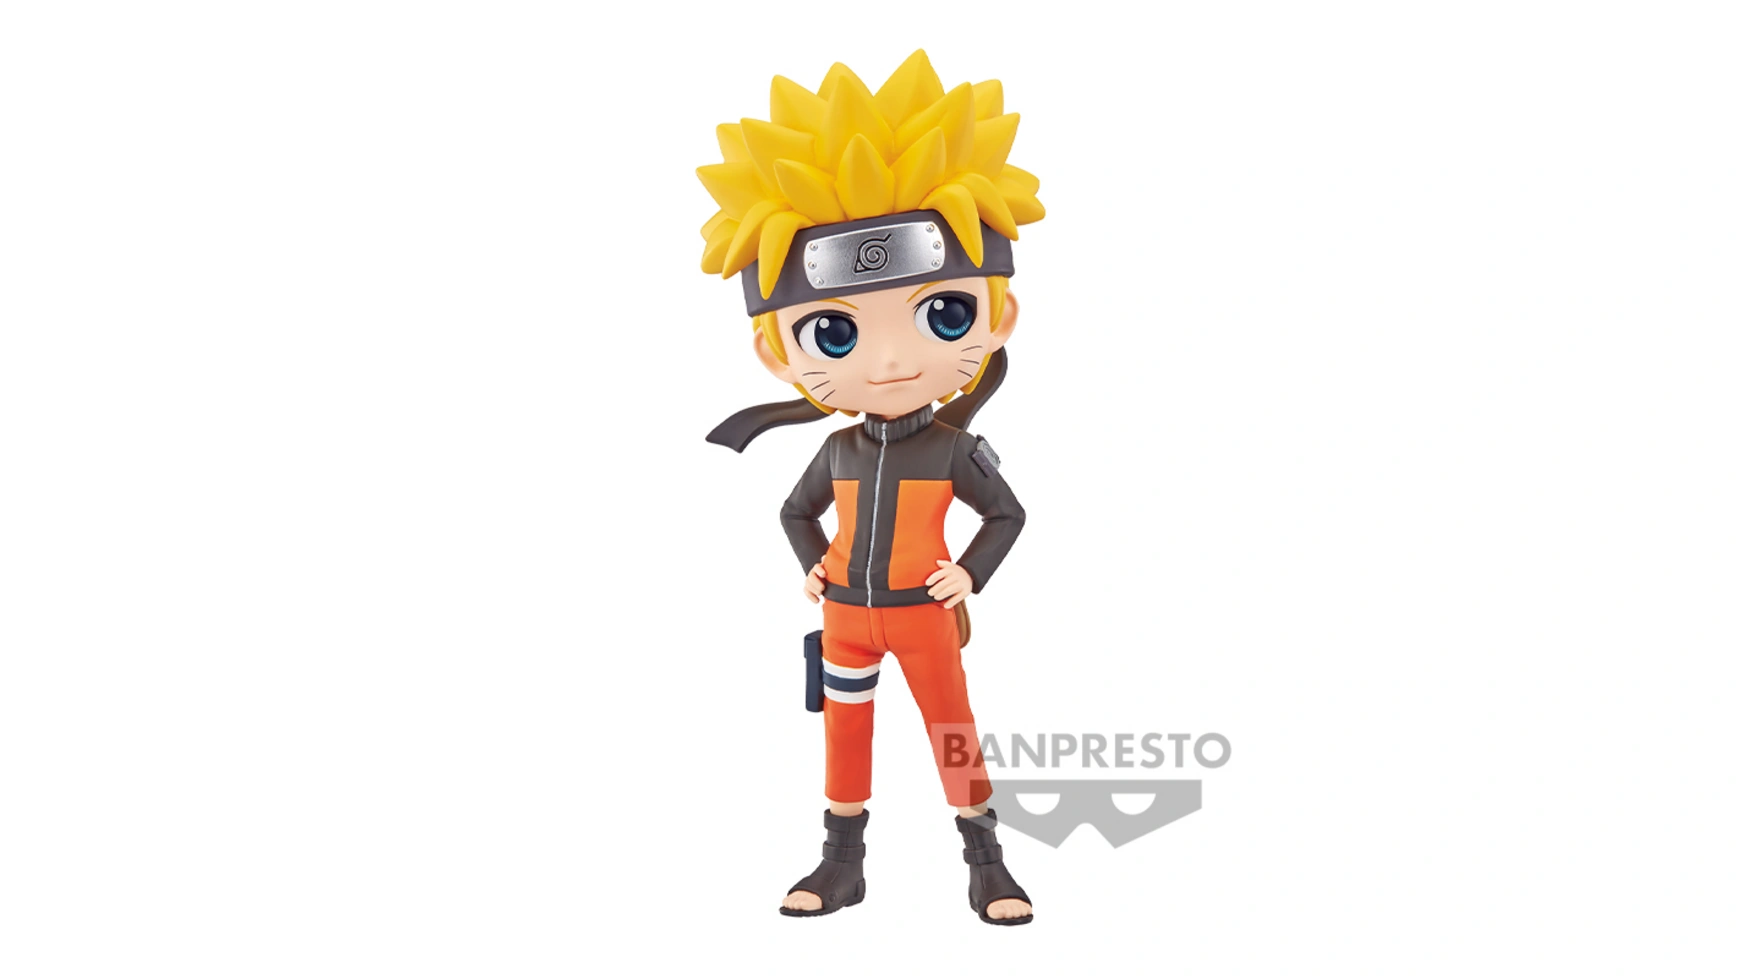 Банпресто Q Поскет Naruto Shippuden Наруто Узумаки фигурка q posket disney character mulan avatar style version a